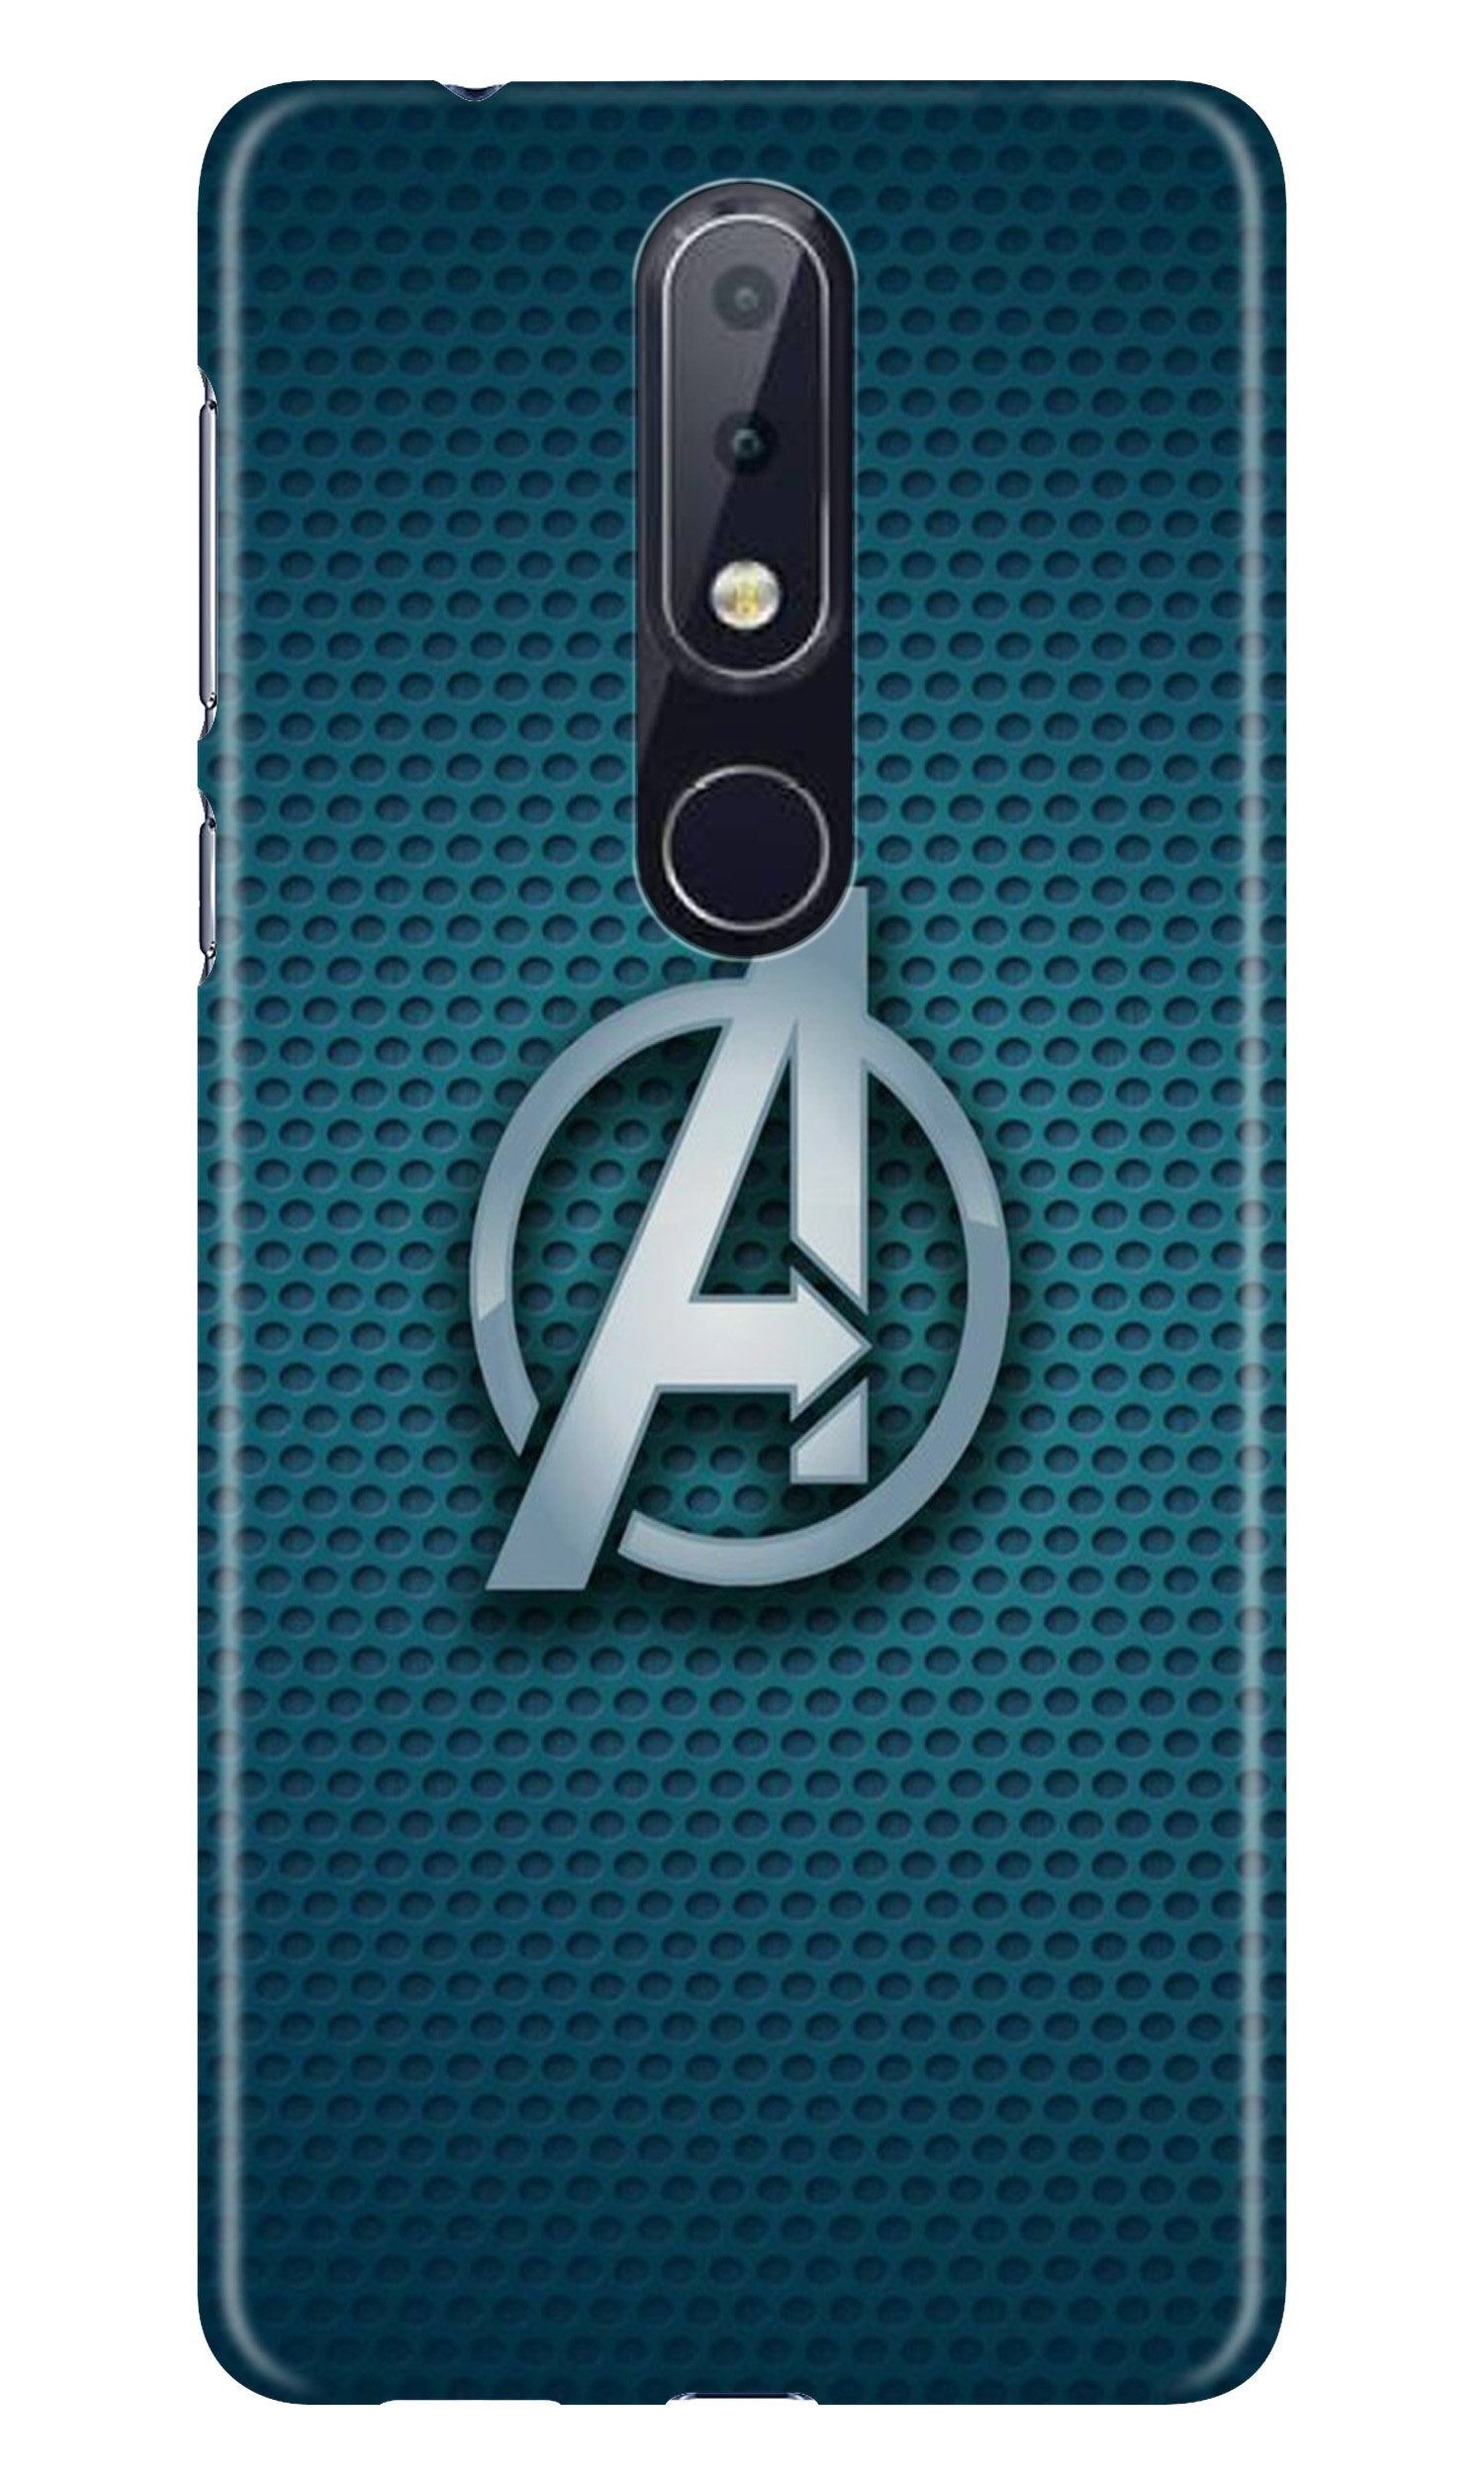 Avengers Case for Nokia 4.2 (Design No. 246)